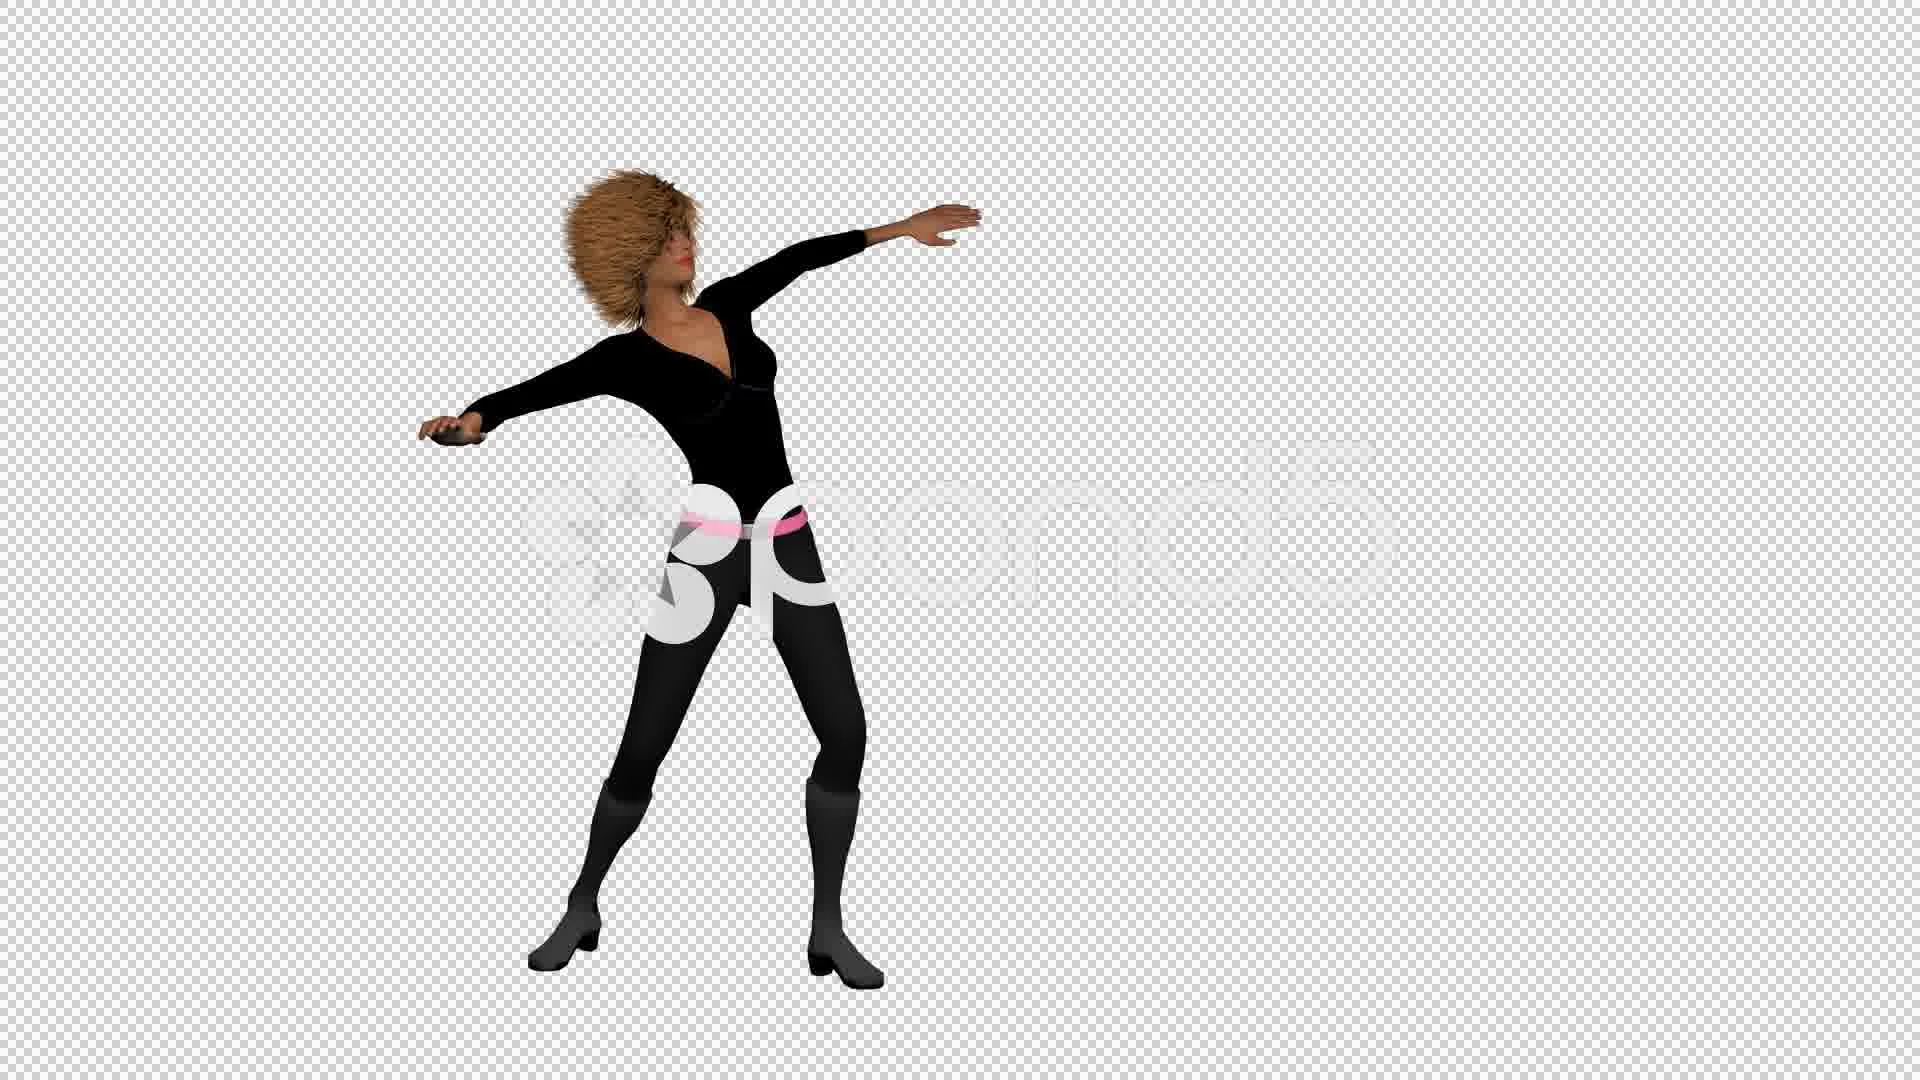 Animated 3D Model Samba Dancing With Alp... | Stock Video | Pond5